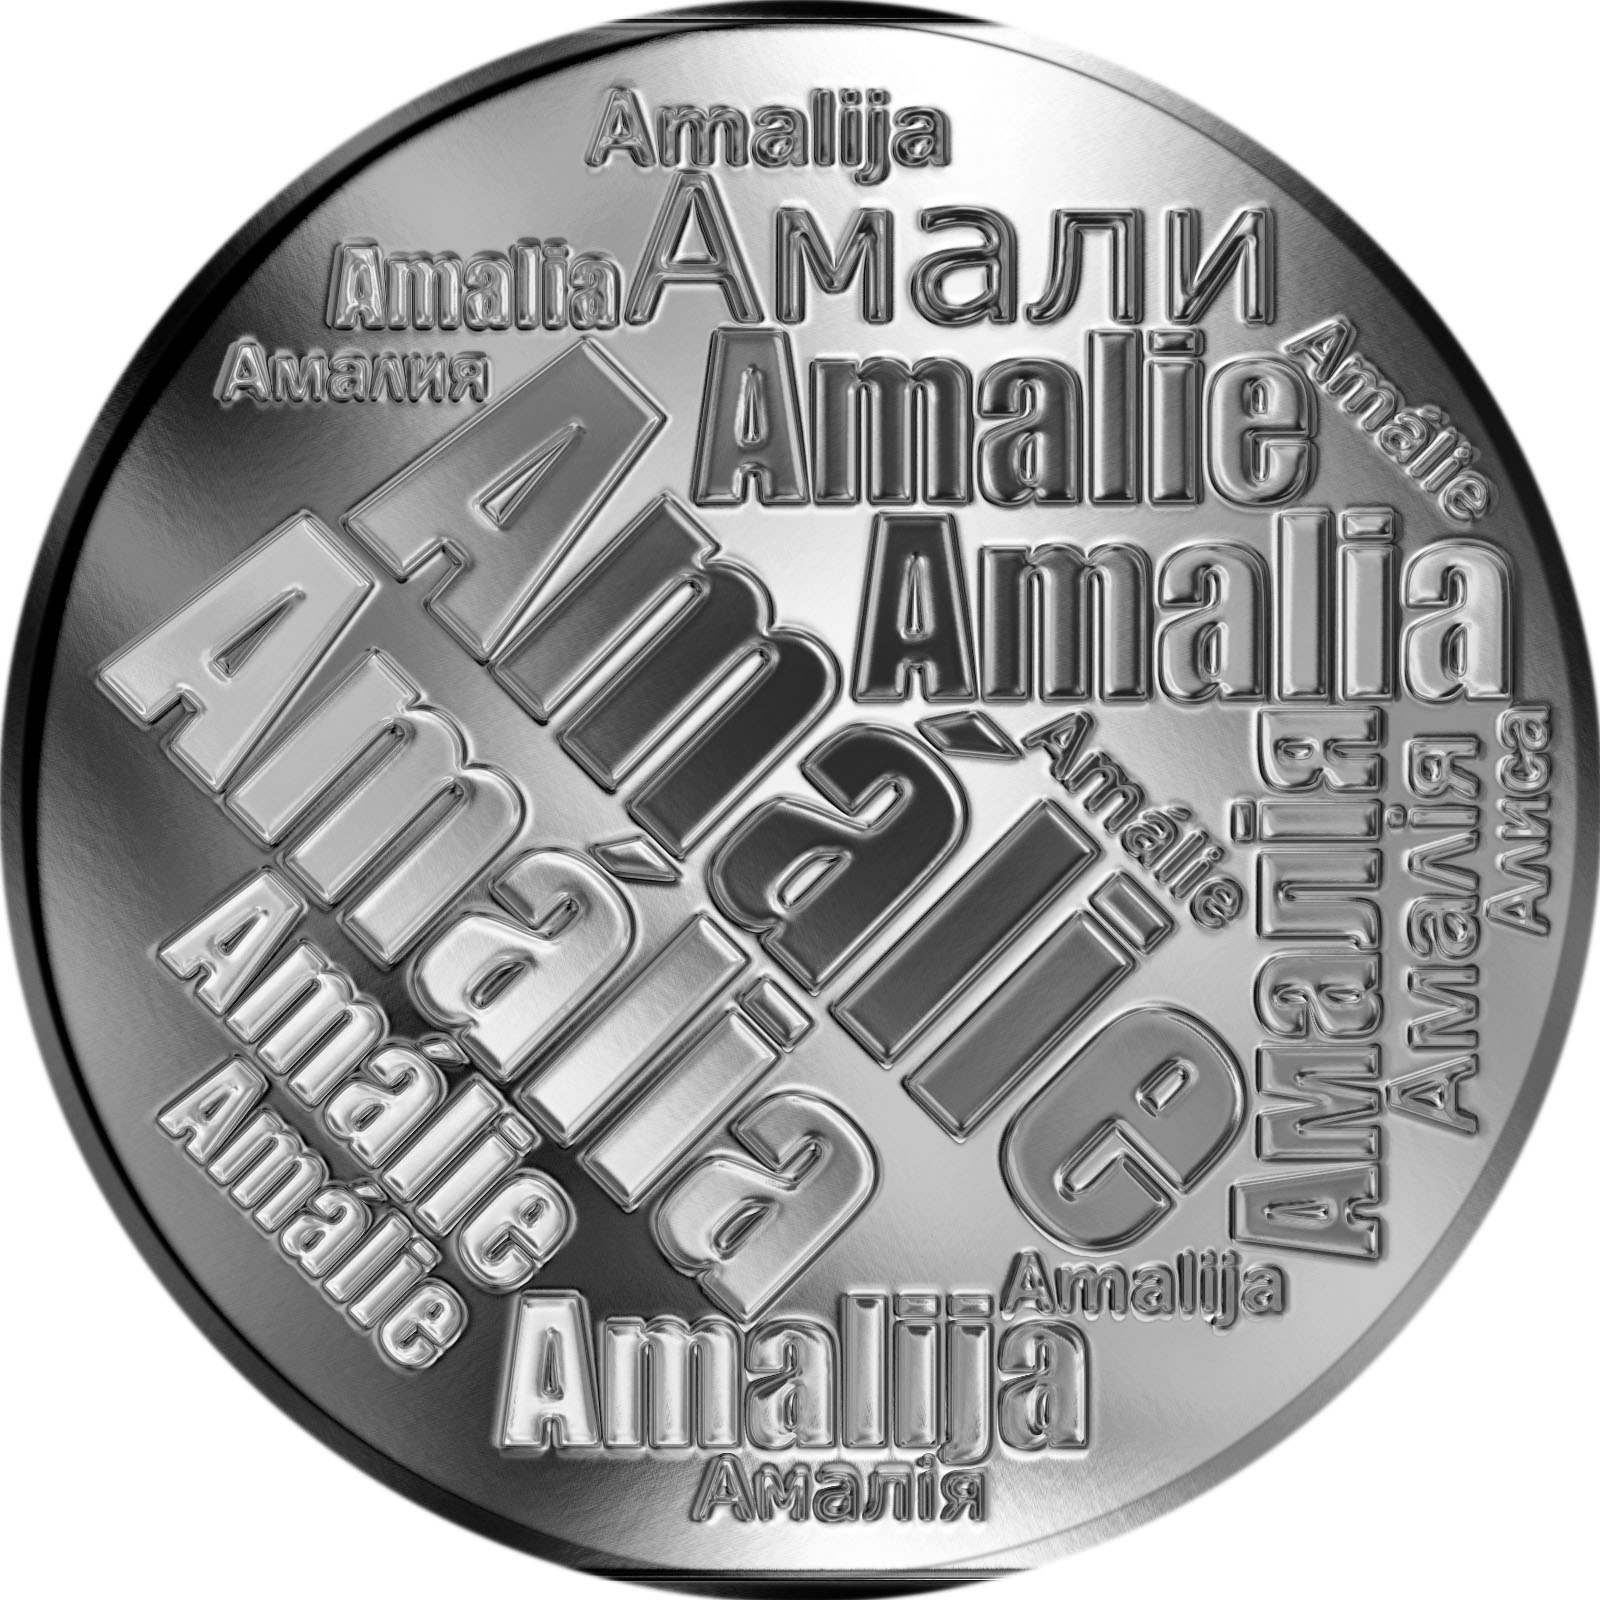 Co znamená jméno Amálie?